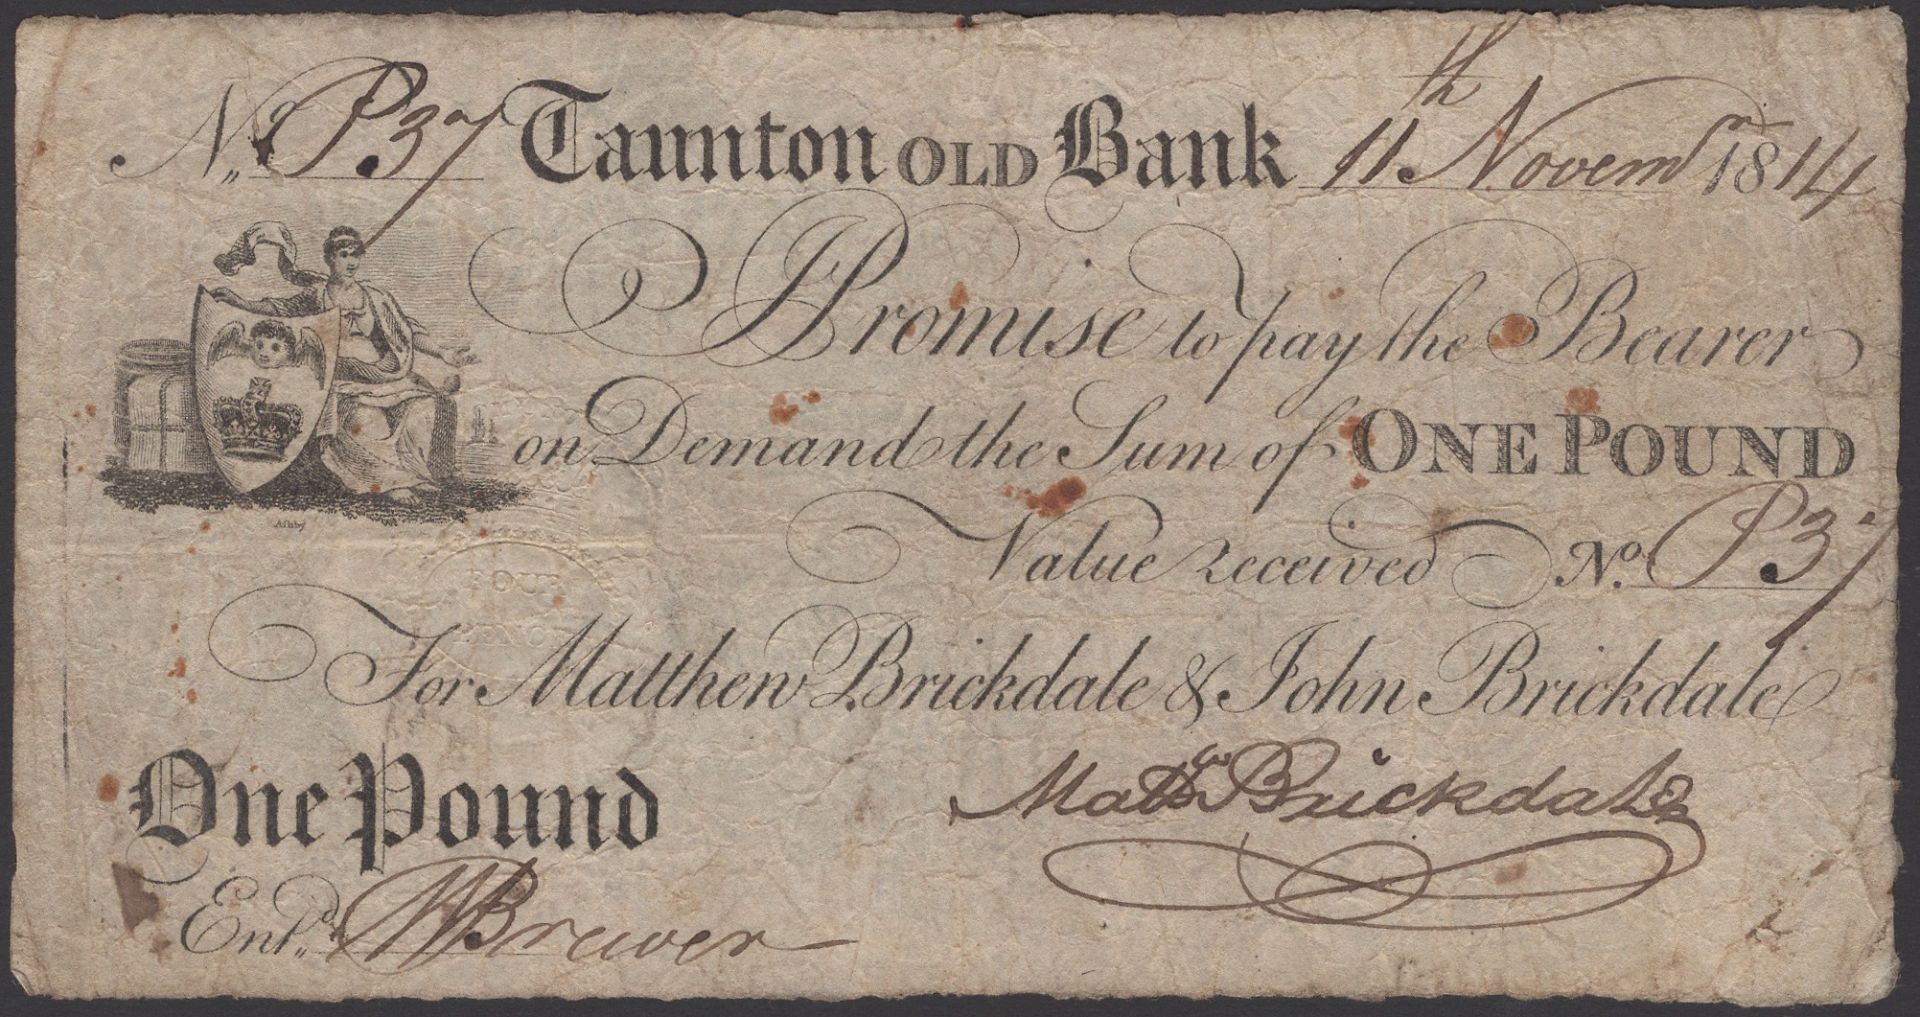 Taunton Bank, for Matthew Brickdale & John Brickdale, Â£1, 11 November 1814, serial number P3...